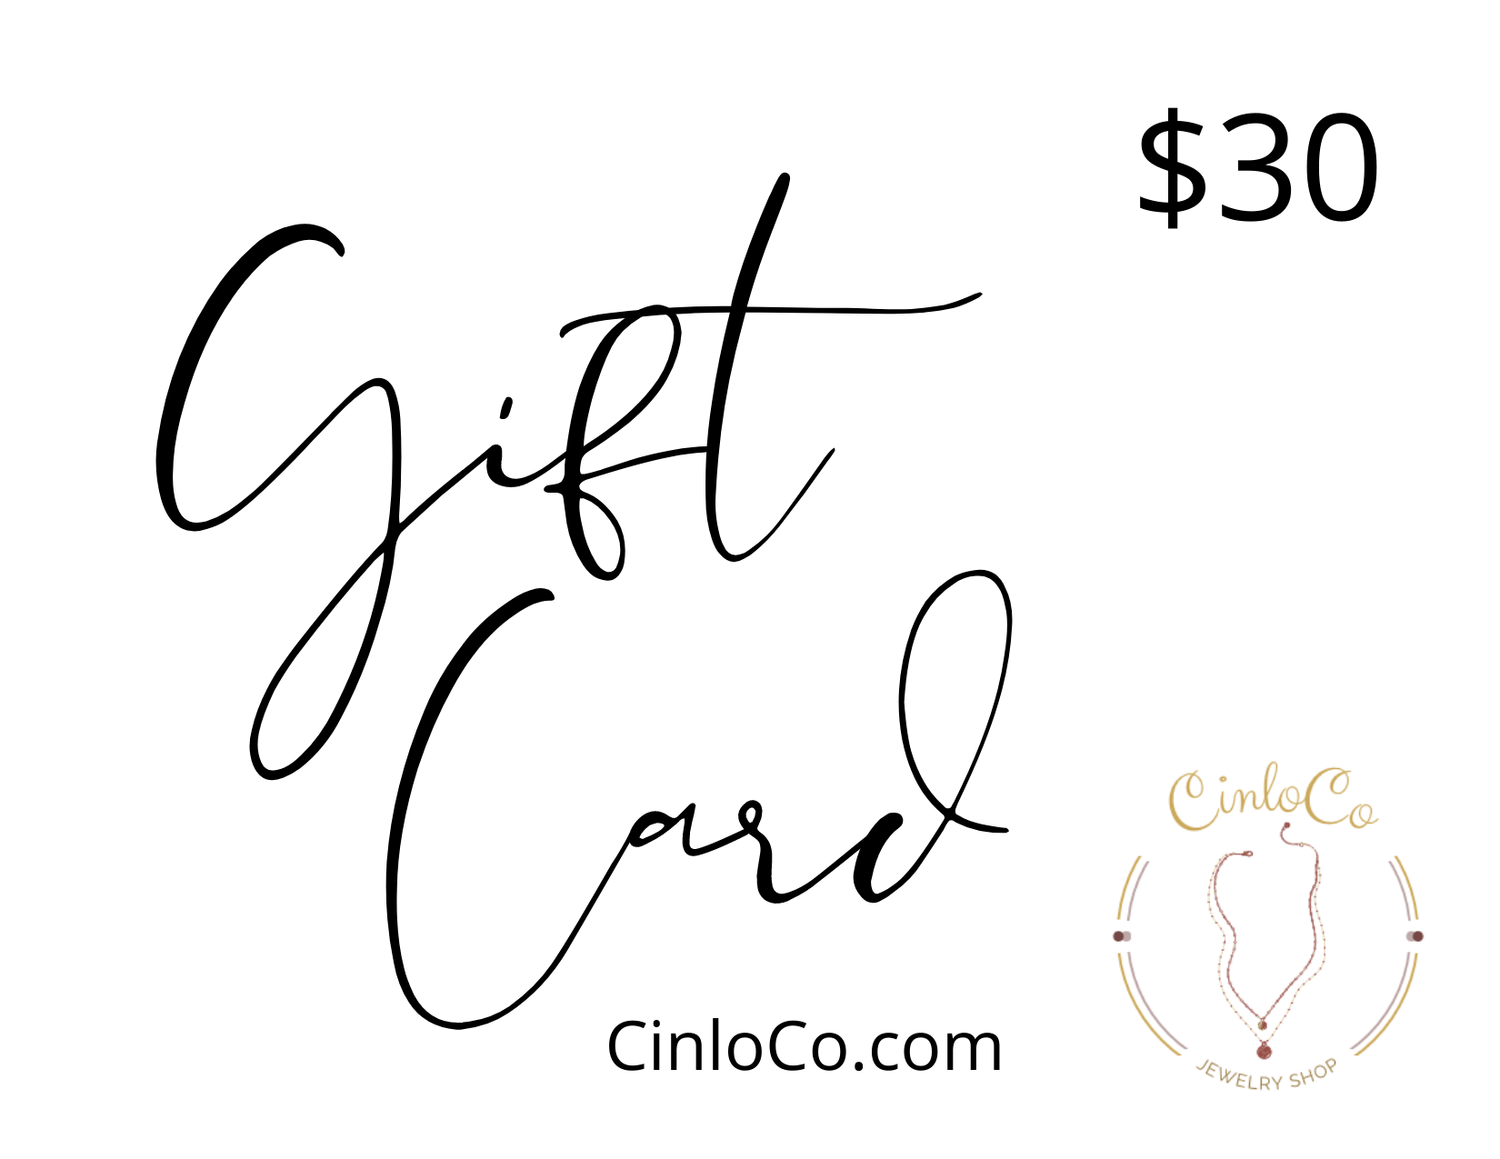 CinloCo gift Card - CinloCo